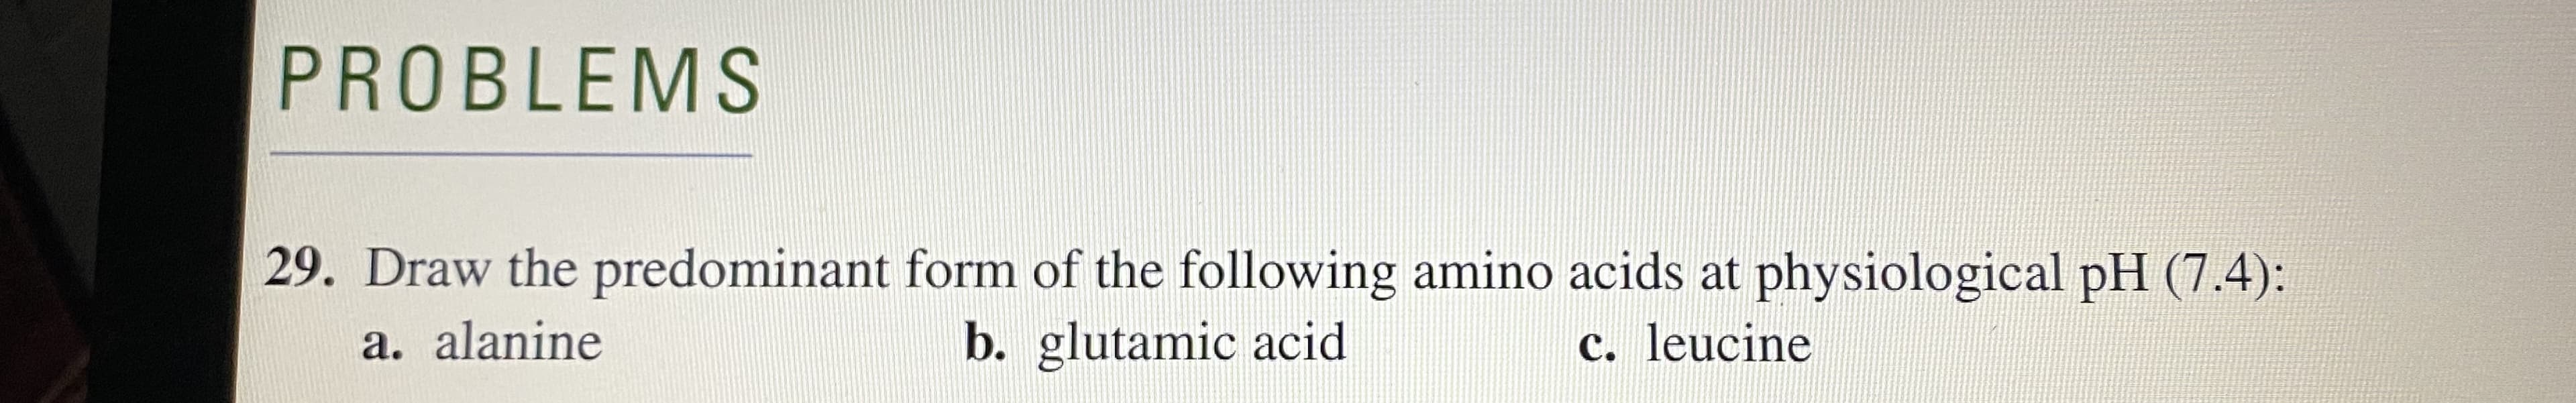 Draw the predominant form of the following amino acids at physiological pH (7.4):
a. alanine
b. glutamic acid
c. leucine
